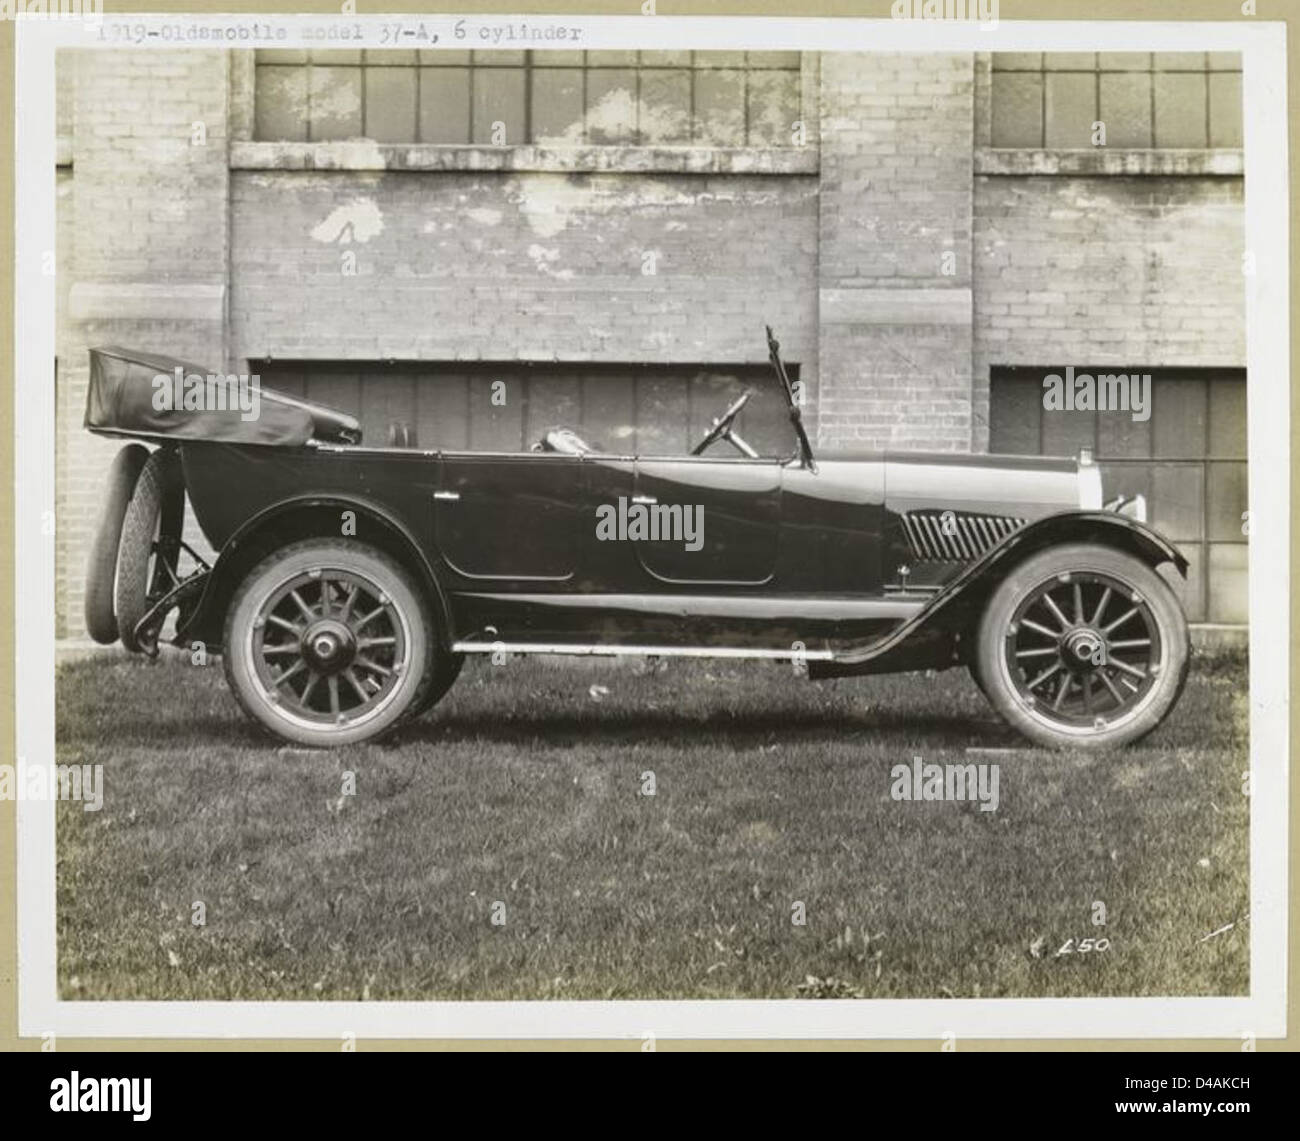 1919 - Oldsmobile - Model 37-A, 6 cylinder. Stock Photo